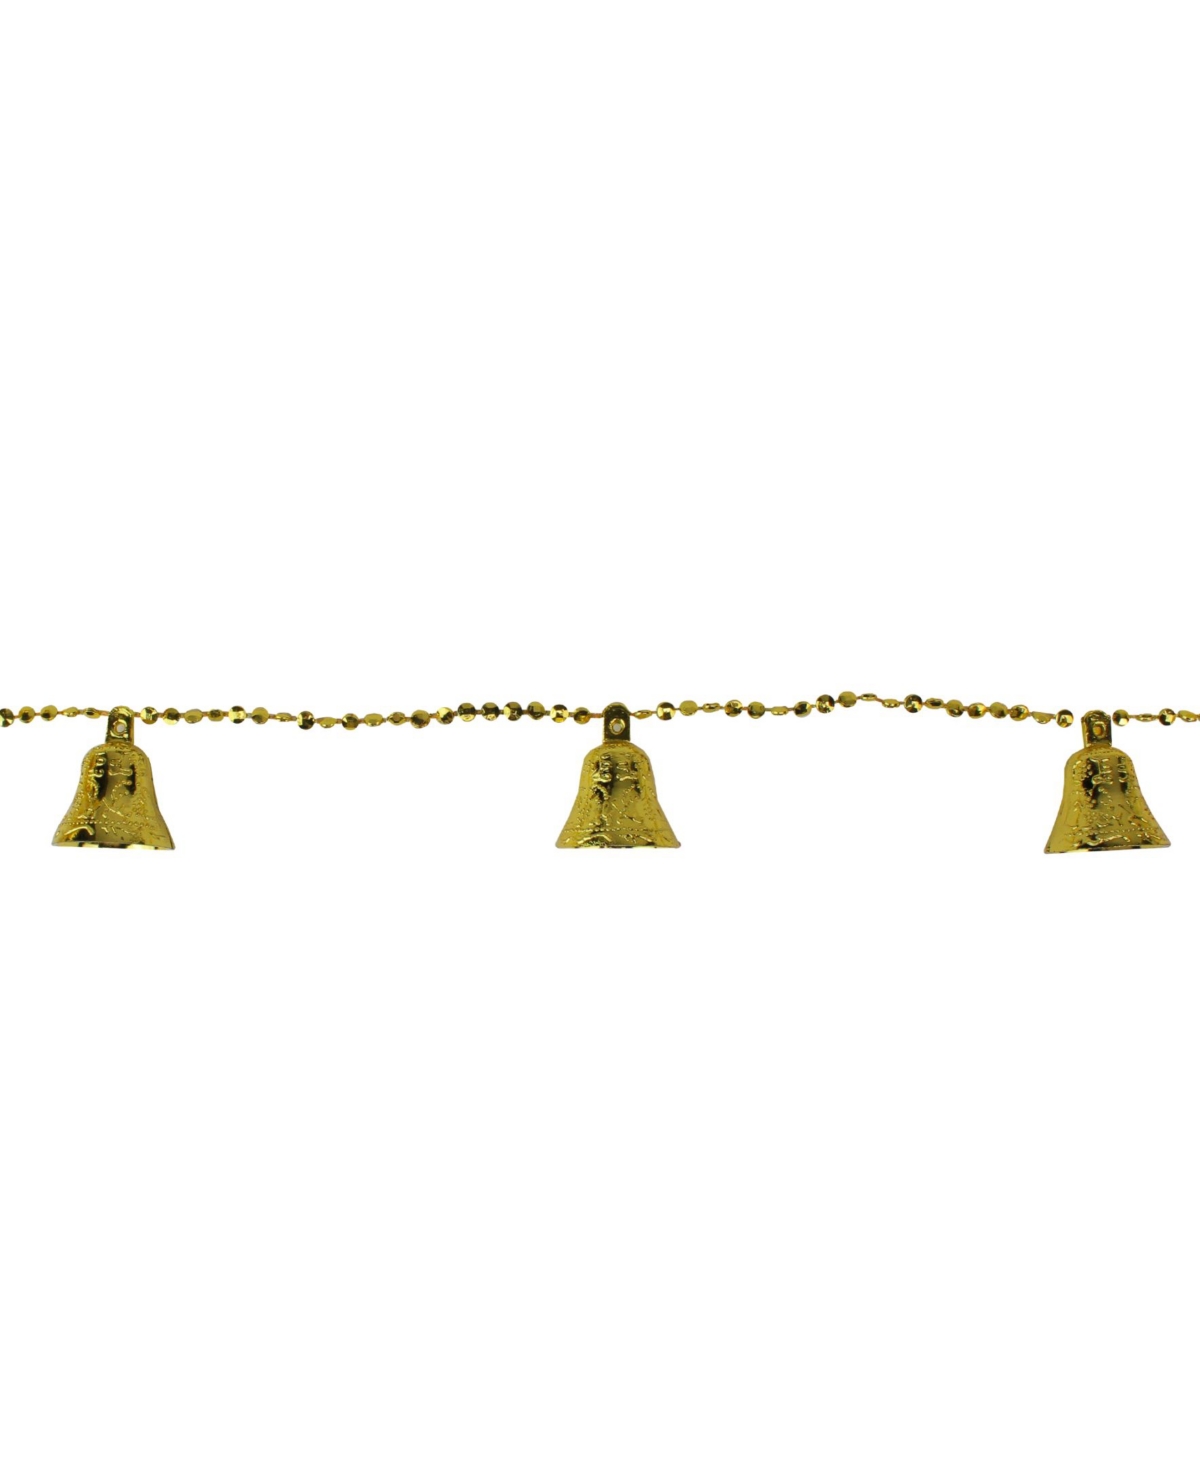 Unlit Northlight Unlit Shiny Gold Tone Bell Beaded Artificial Christmas Garland Set - Gold